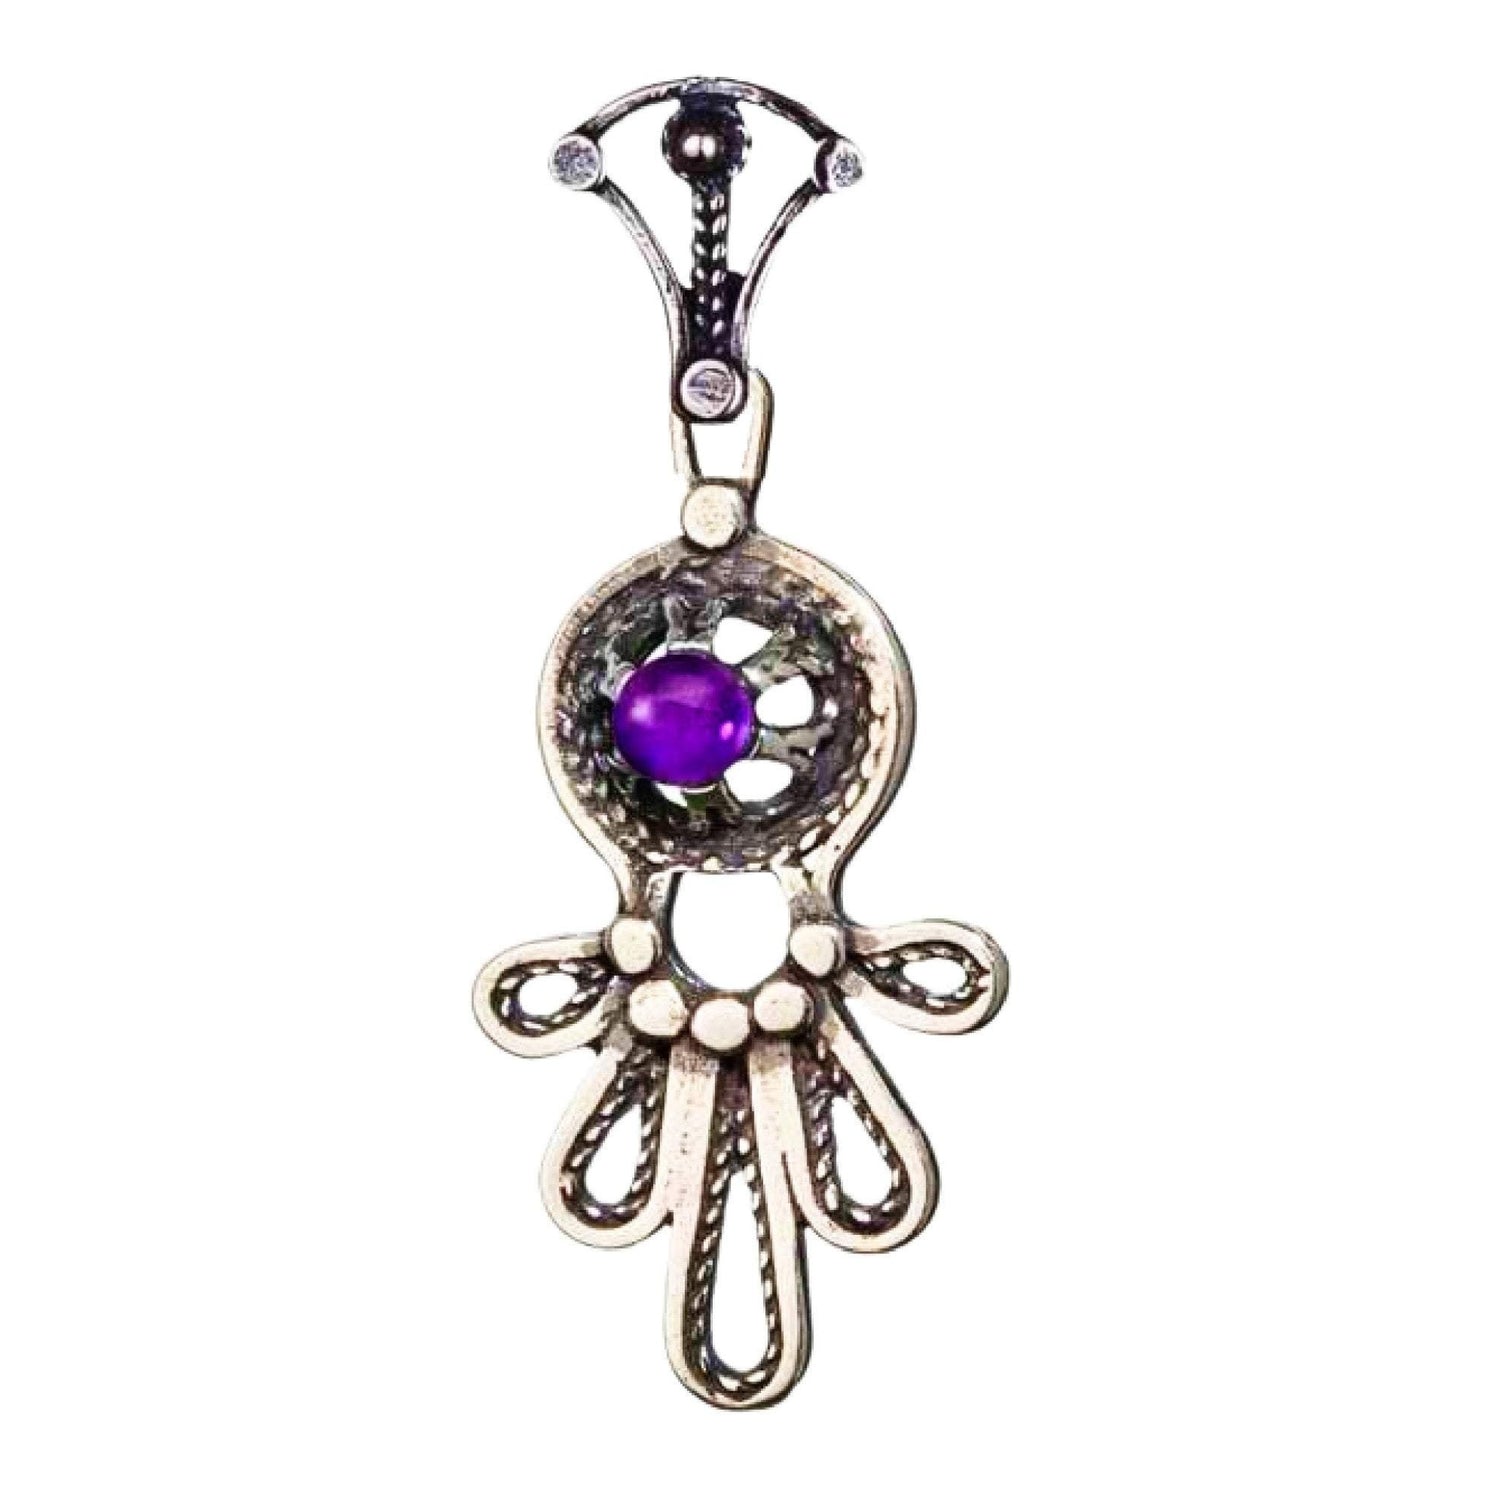 Bluenoemi Necklaces Sterling Silver Chain and Pendant Necklace Israeli Hamsa jewelry designer filigree opal /cornelian/ garnet / amethyst / lapis